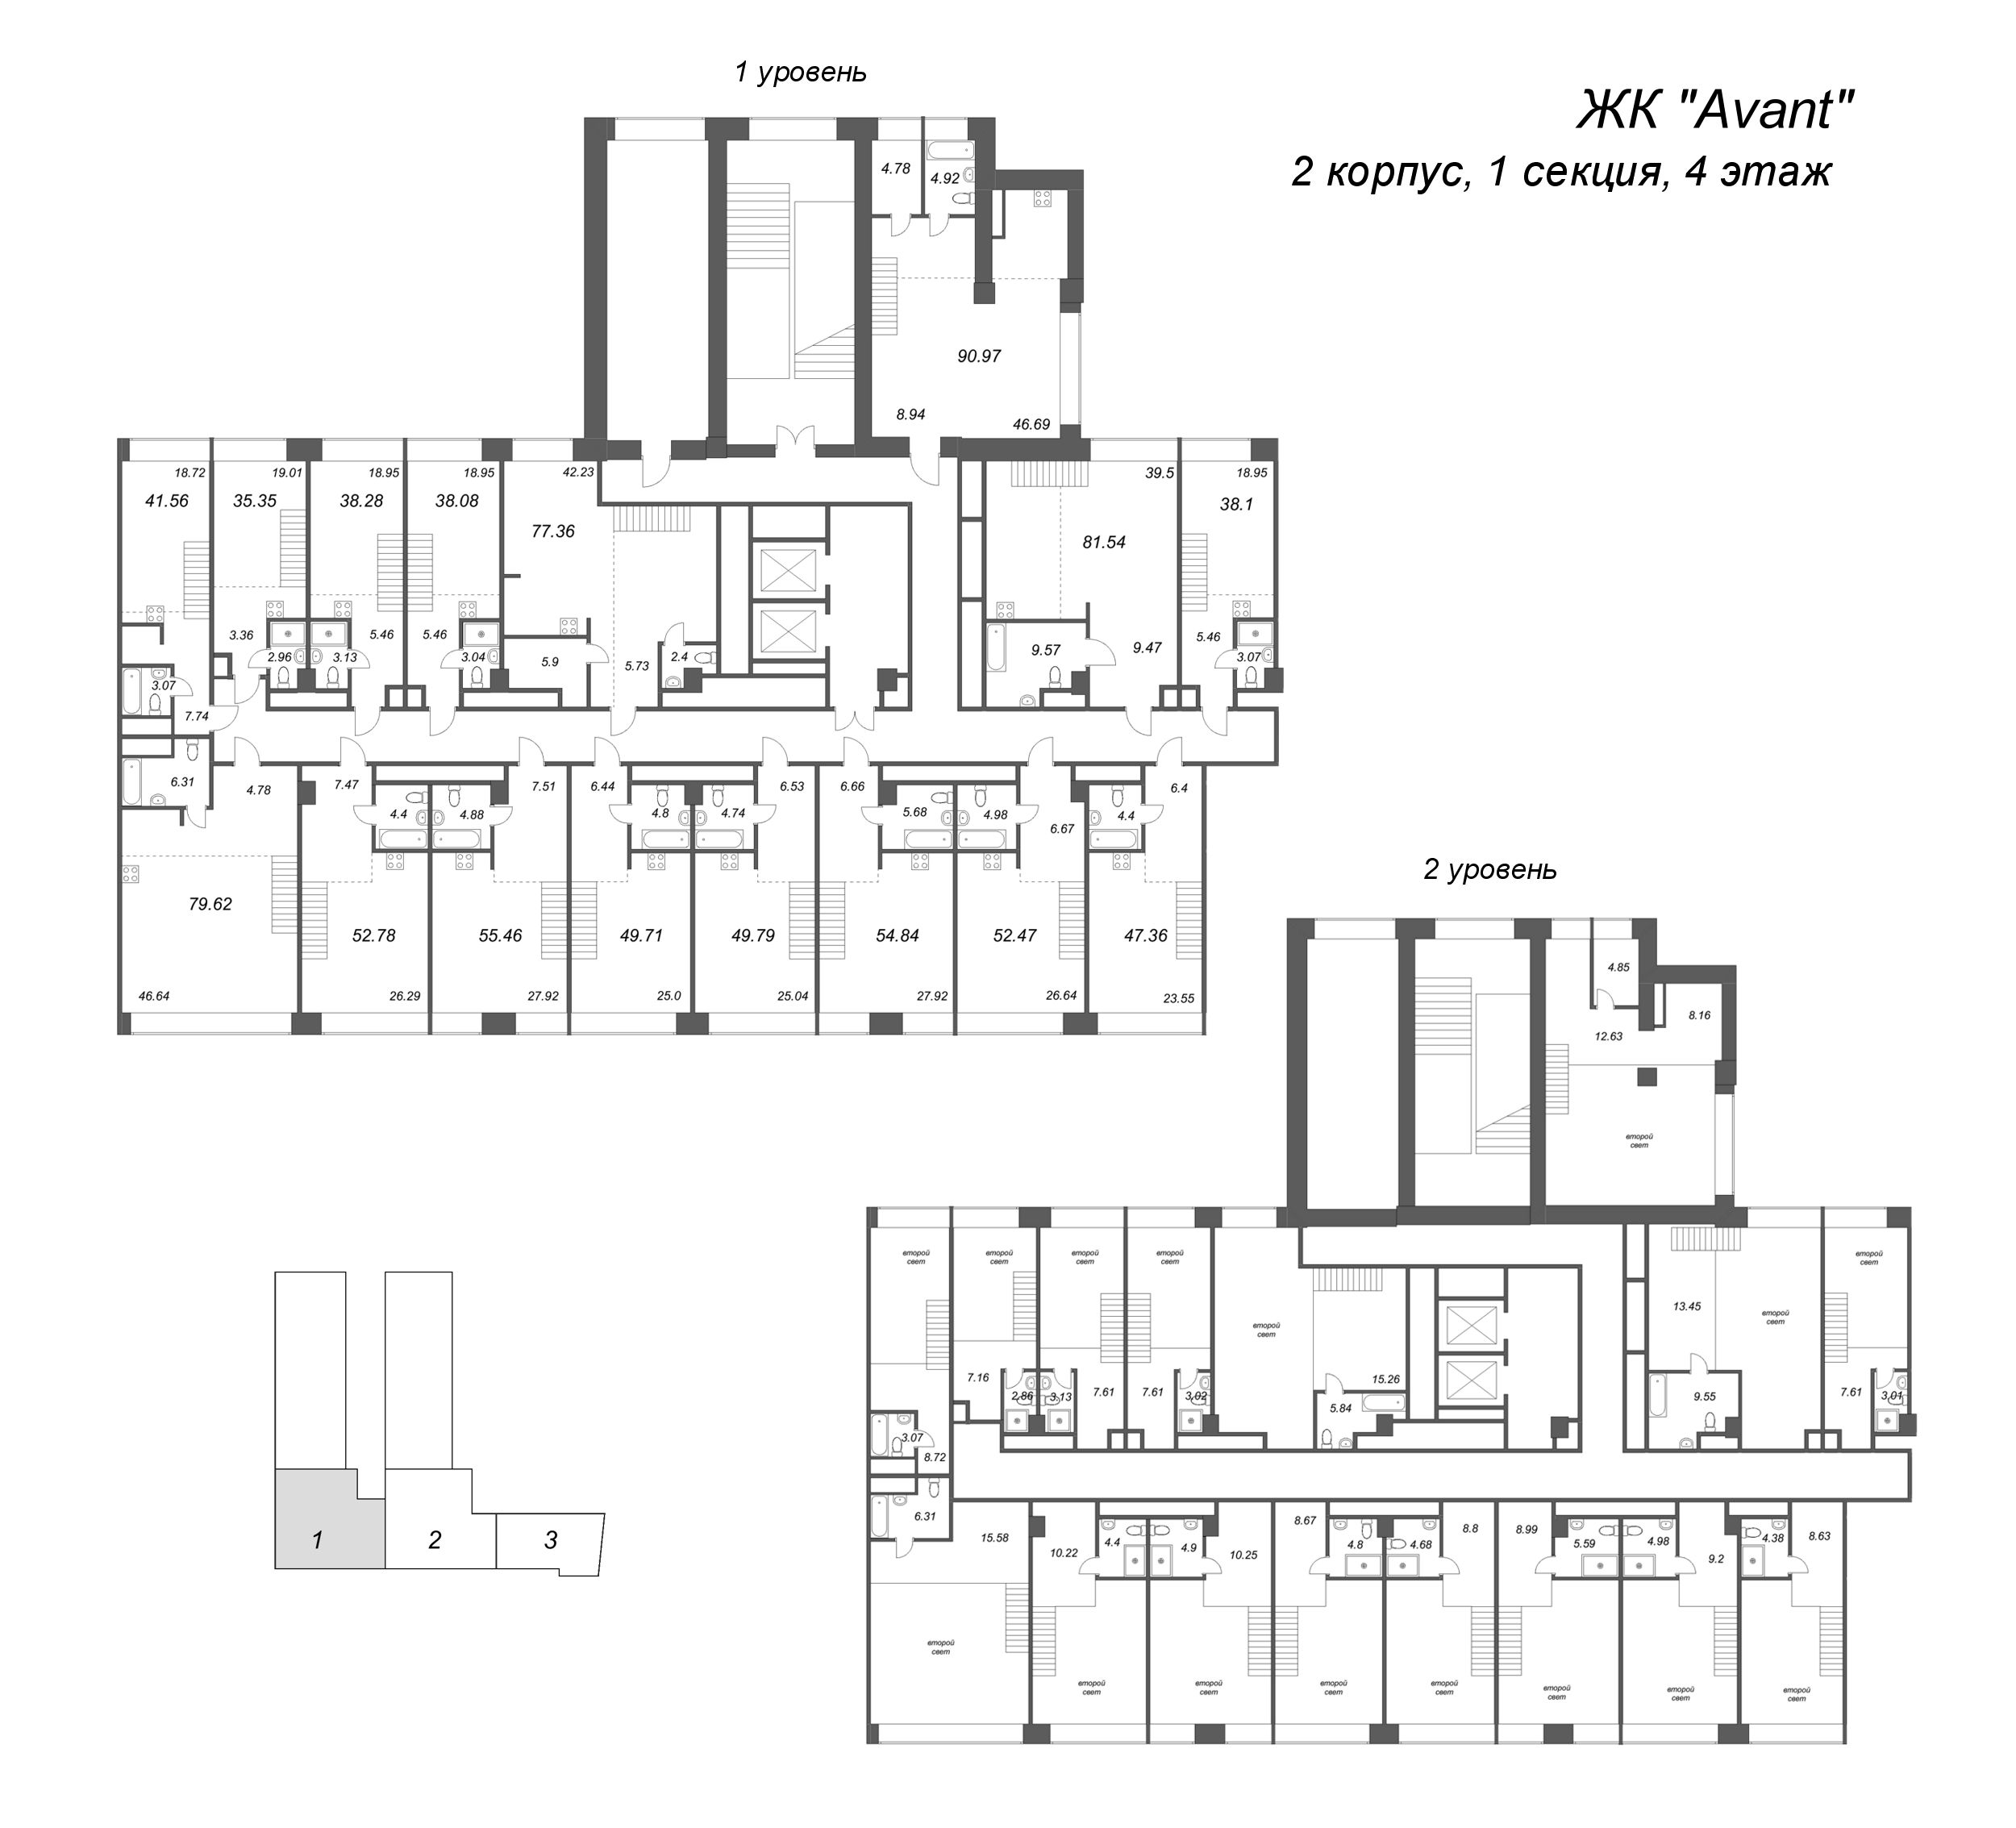 2-комнатная (Евро) квартира, 38.08 м² в ЖК "Avant" - планировка этажа